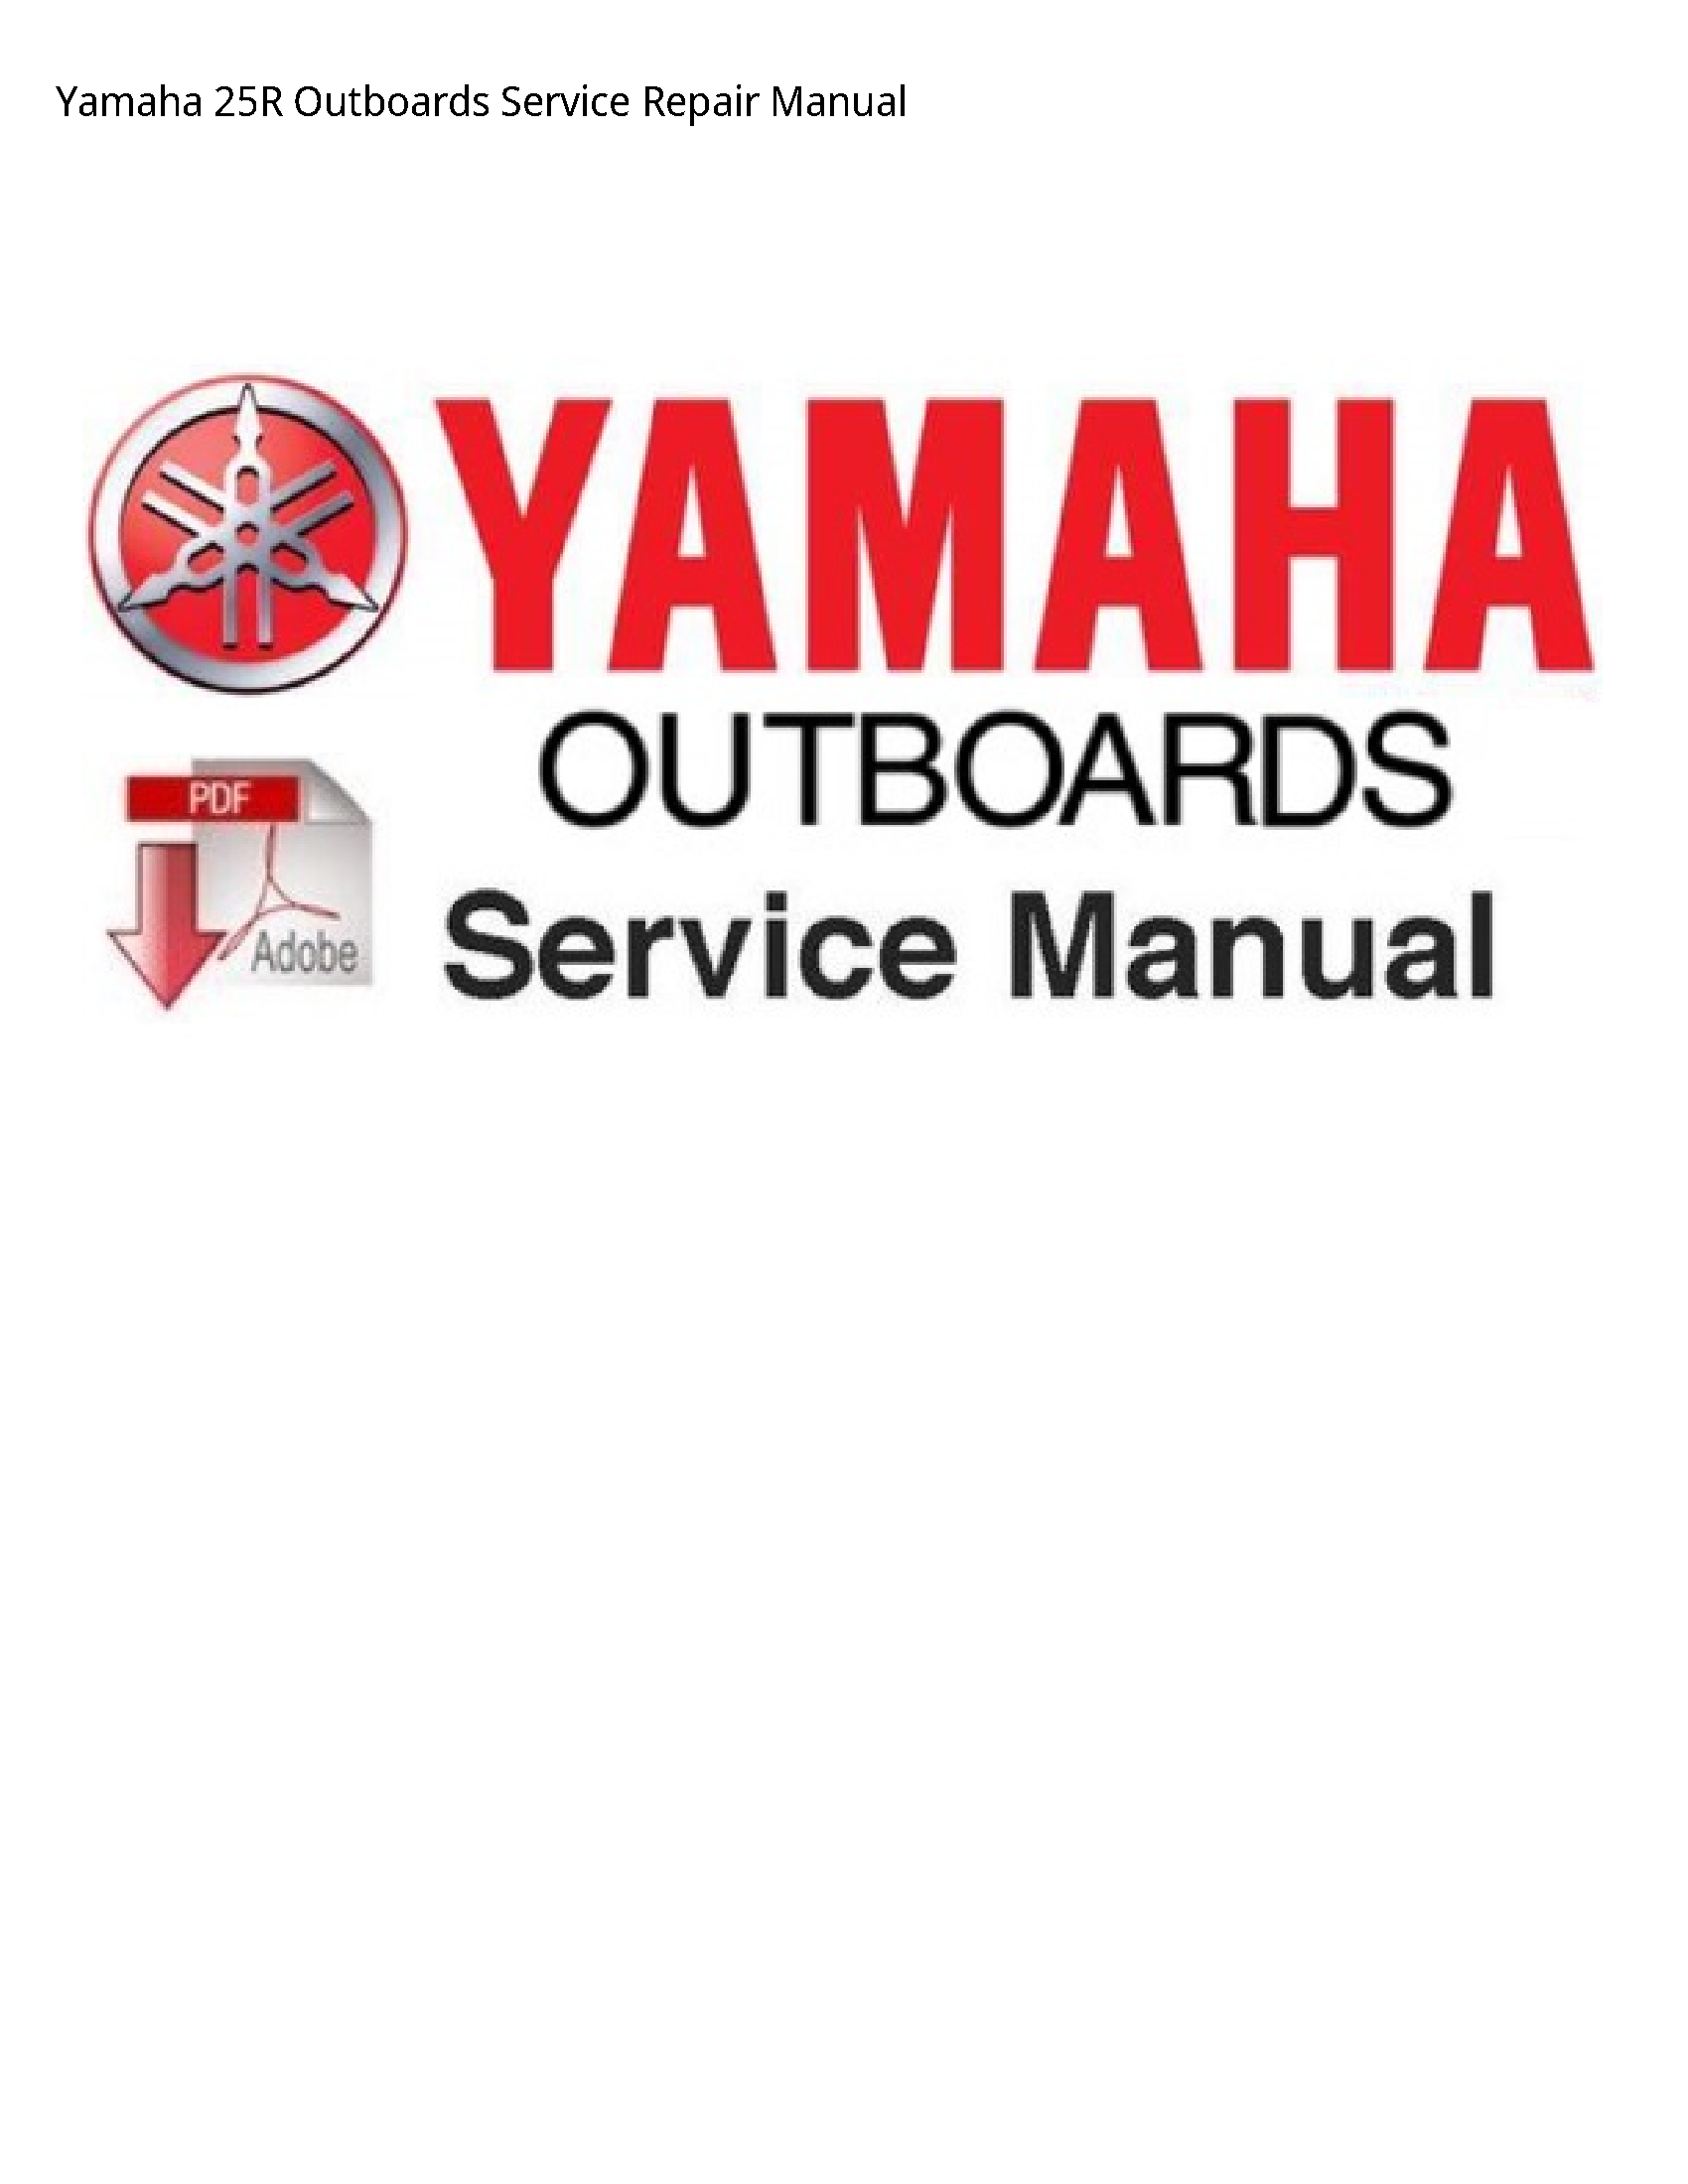 Yamaha 25R Outboards manual